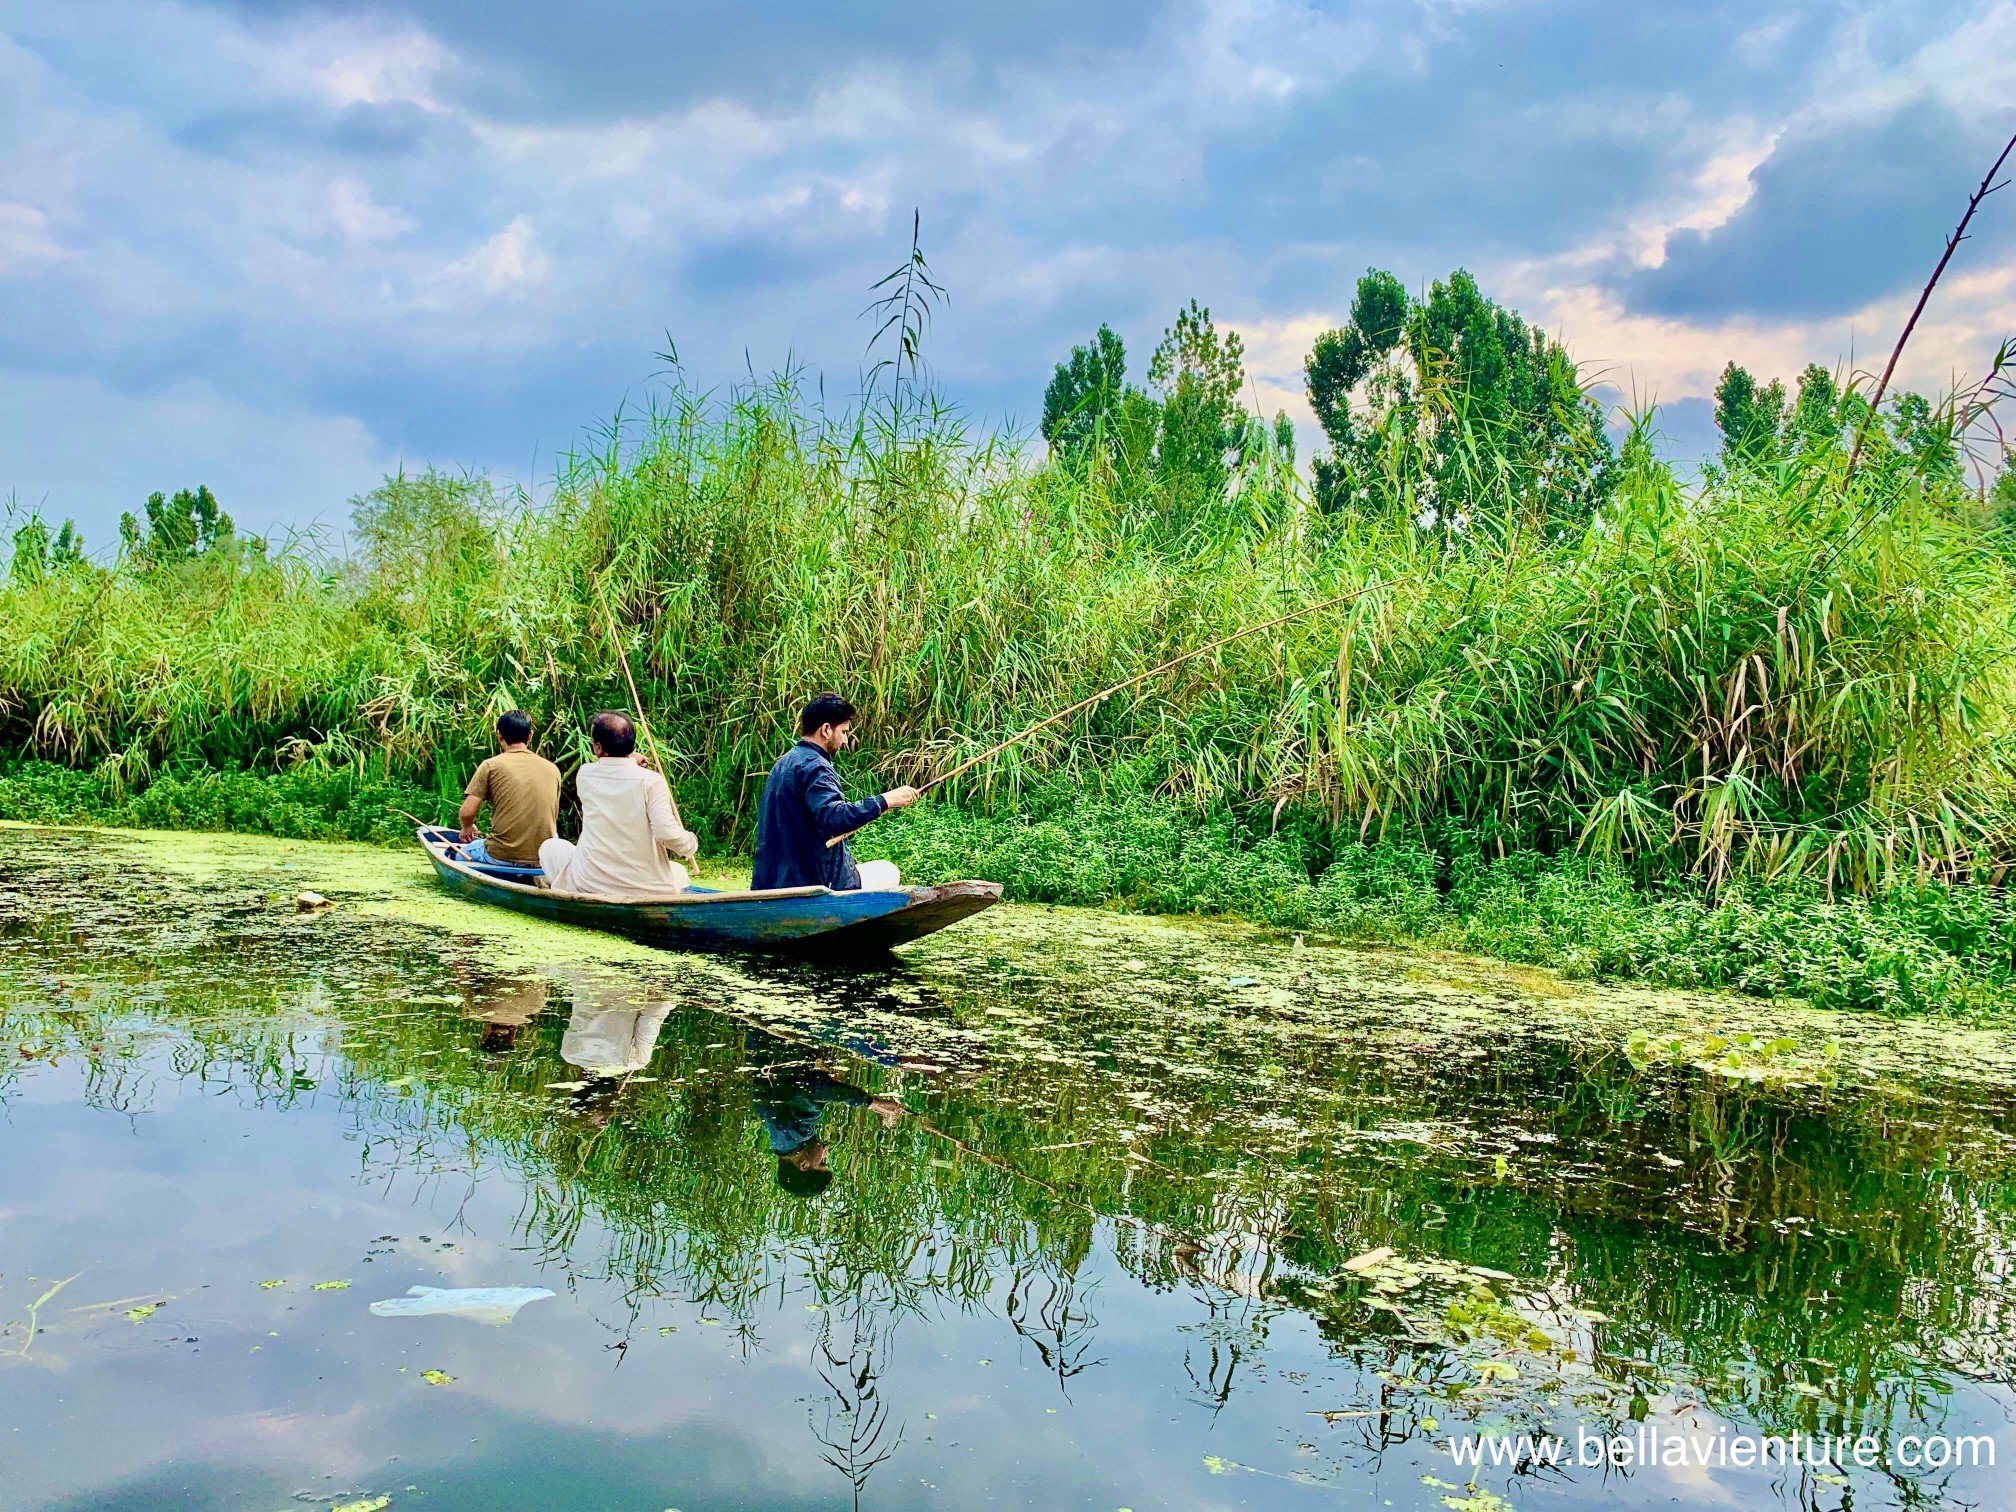 印度 India 北北印 north India 喀什米爾 Kashmir 斯里納加 Srinagar Dal lake 湖景 lakeside 釣魚